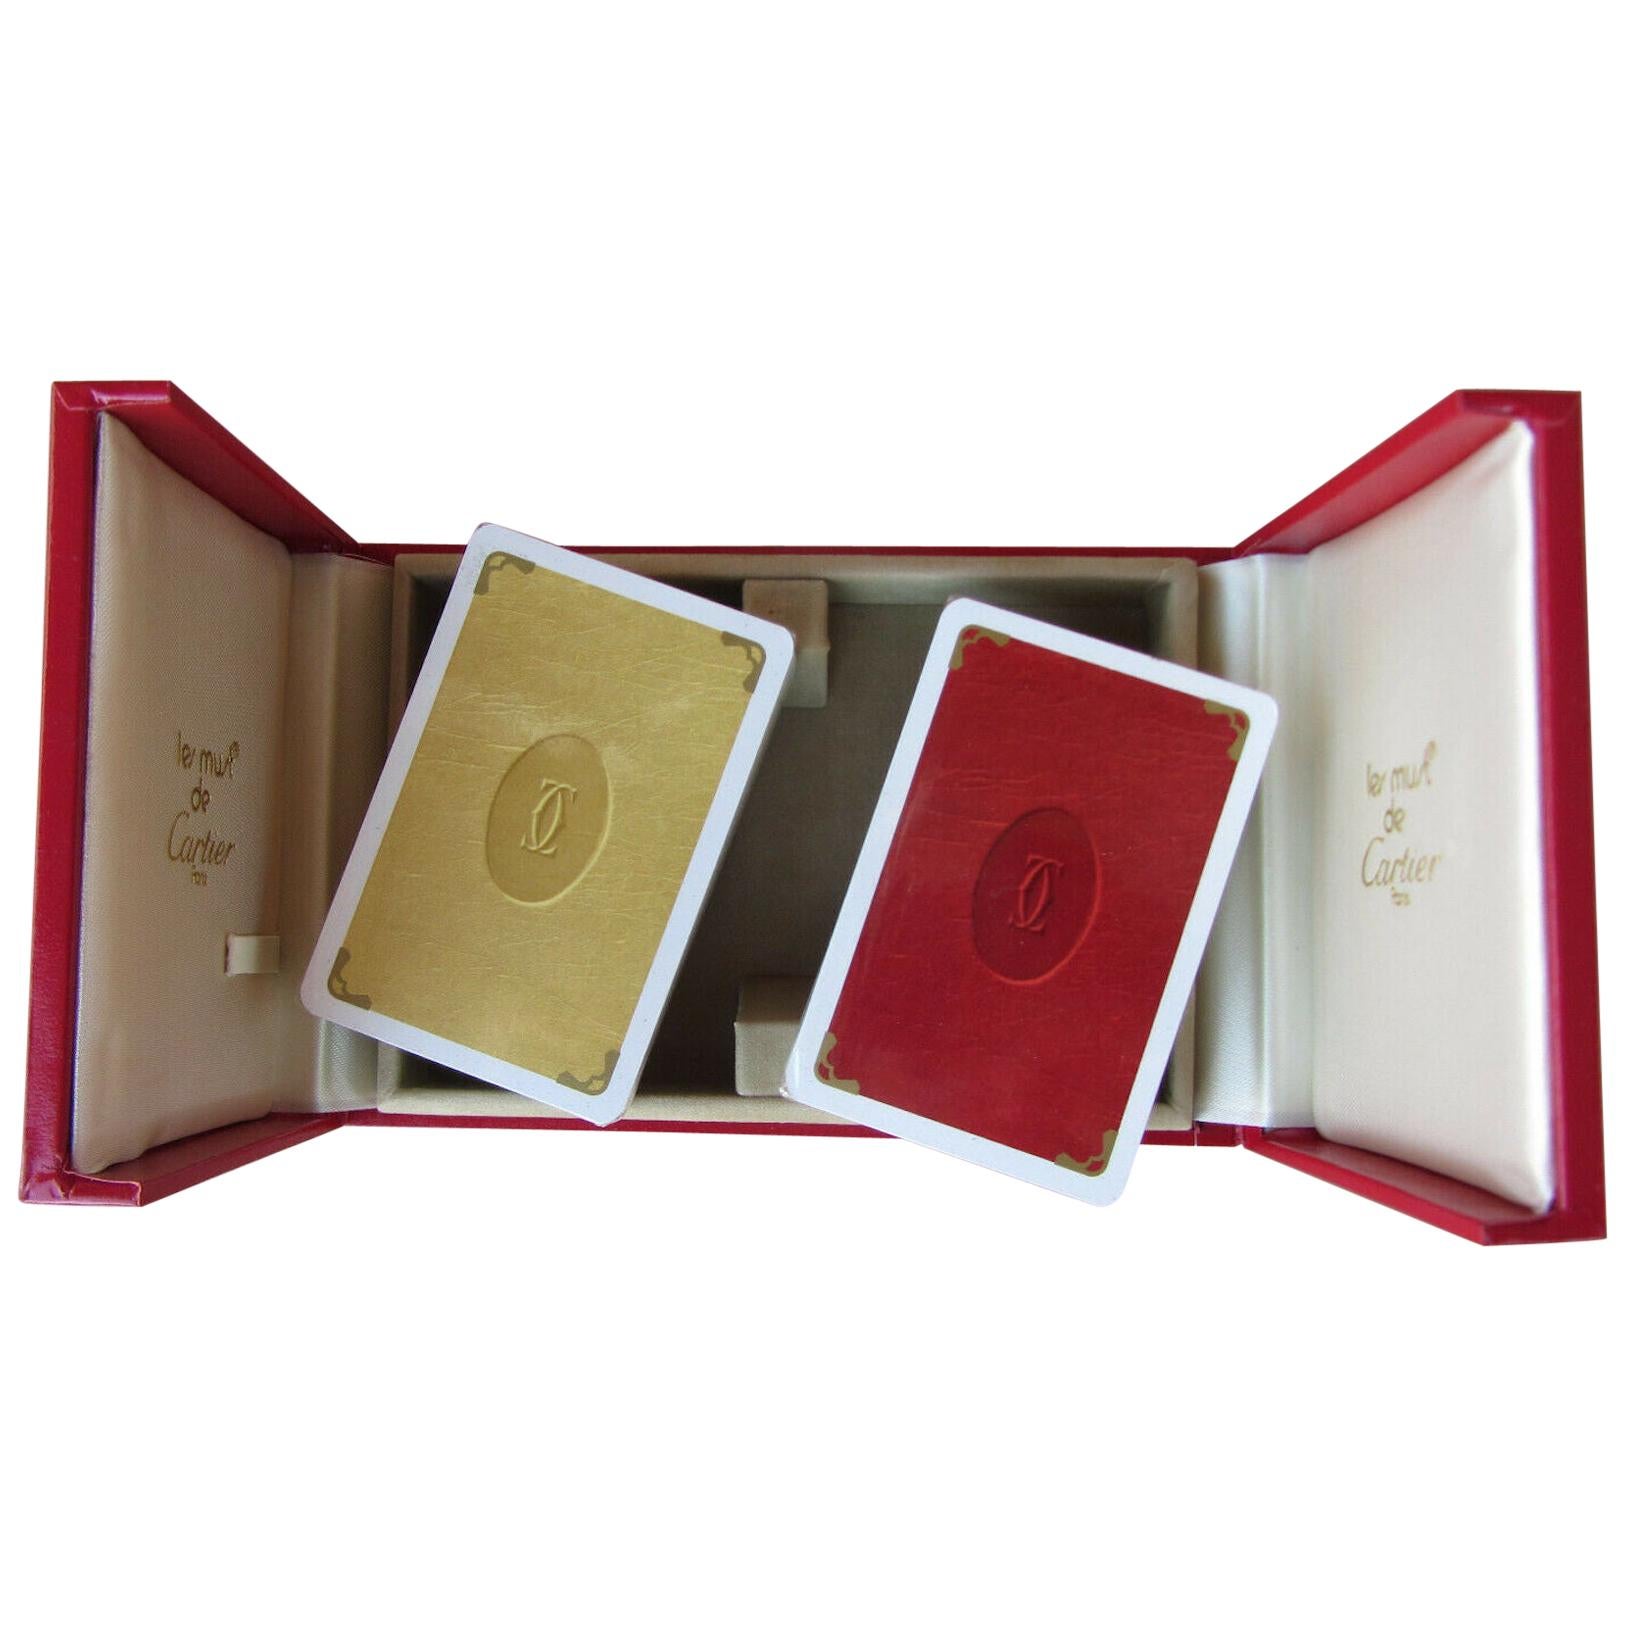 Must de Cartier Paris Vintage Playing Poker or Bridge Cards in Red Original Box